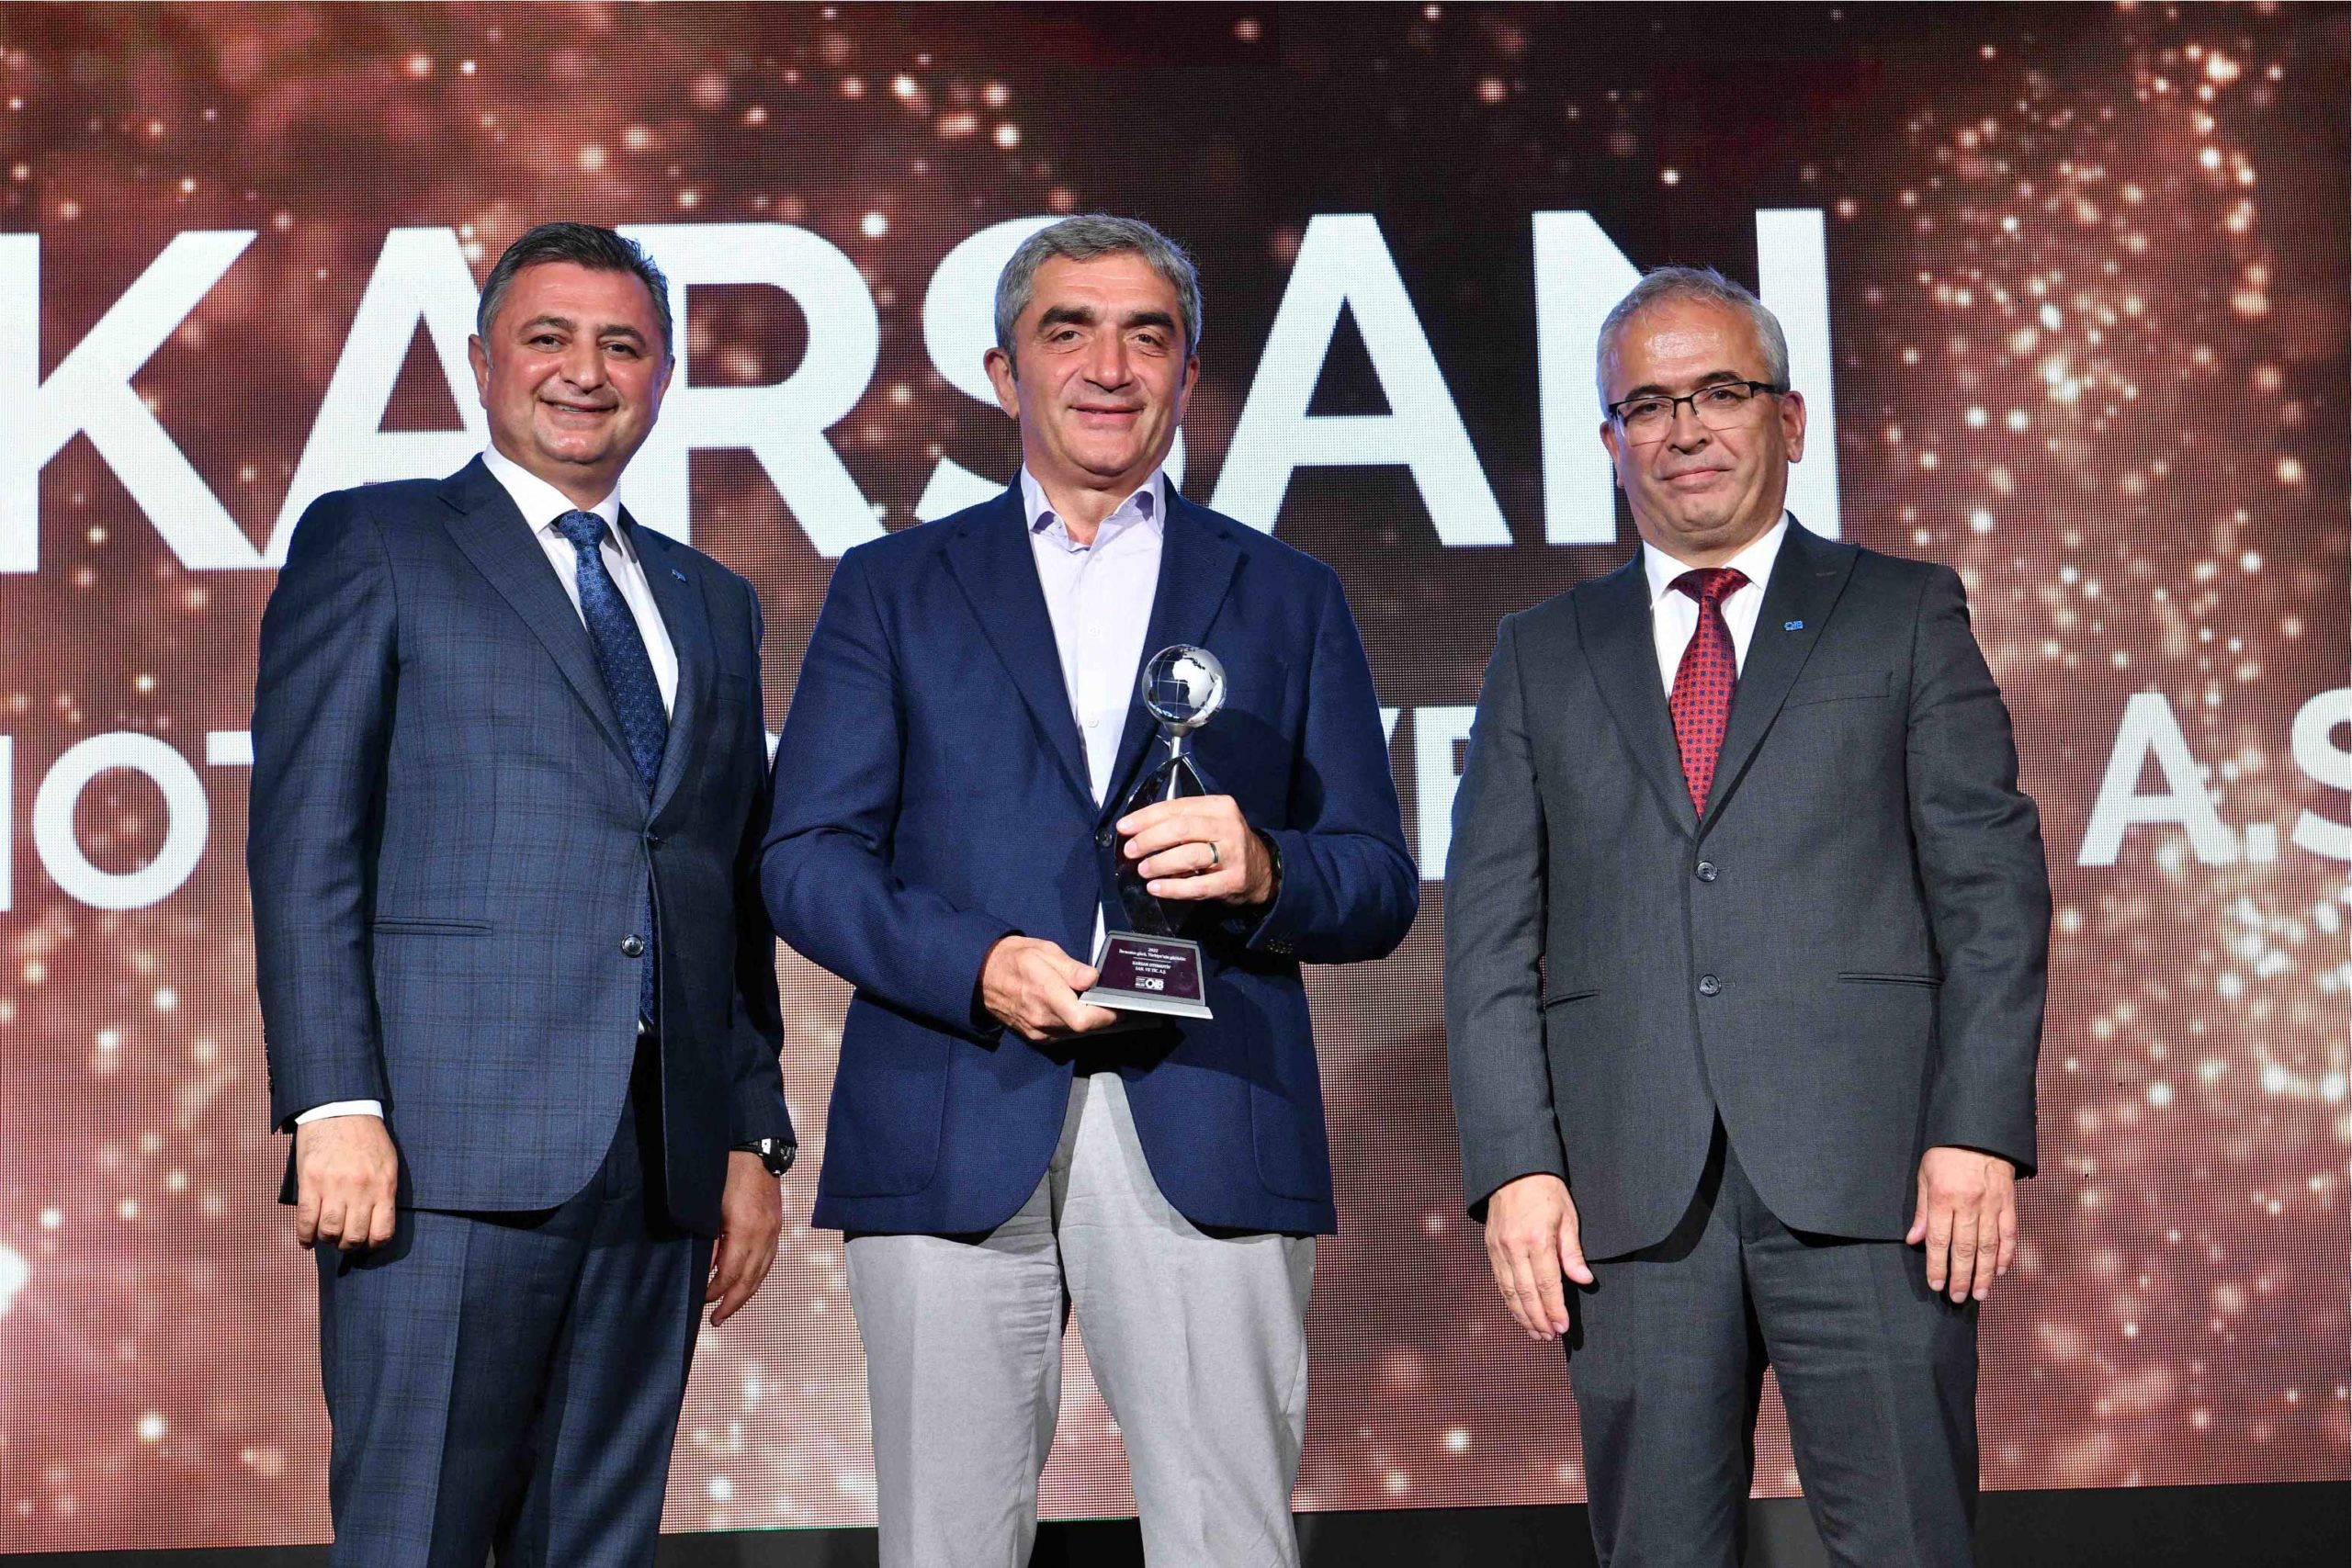 Avrupa’yı elektriklendiren Karsan’a ihracatta ‘Gümüş’ ödül